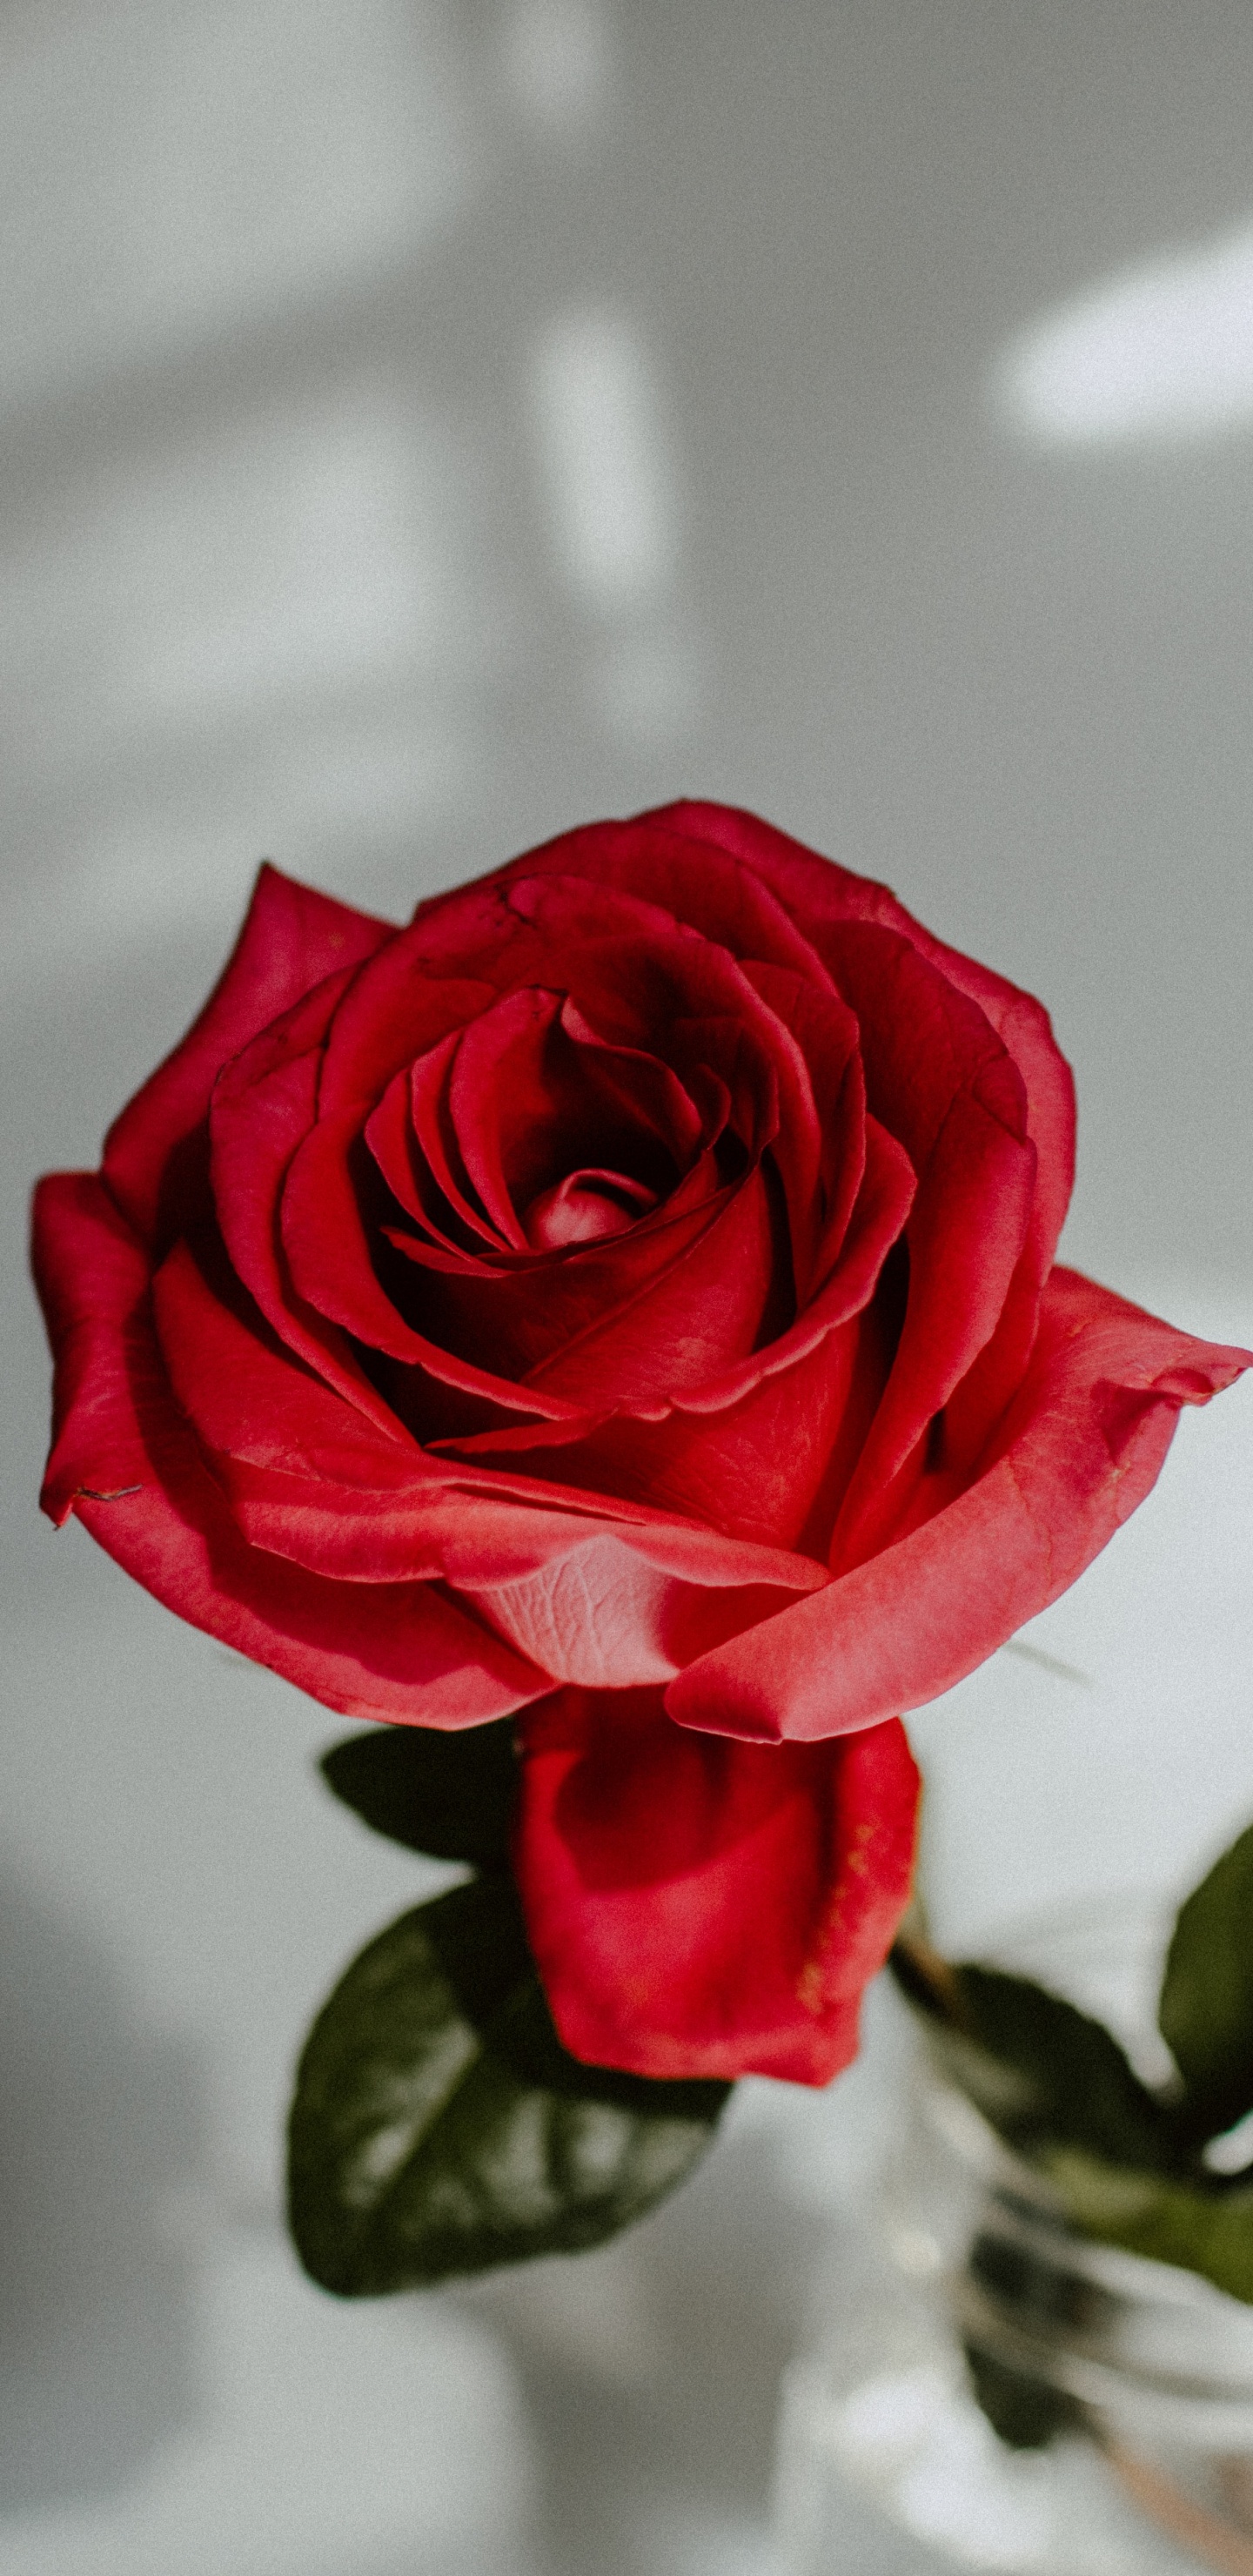 Rose Rouge Dans un Vase en Verre Transparent. Wallpaper in 1440x2960 Resolution